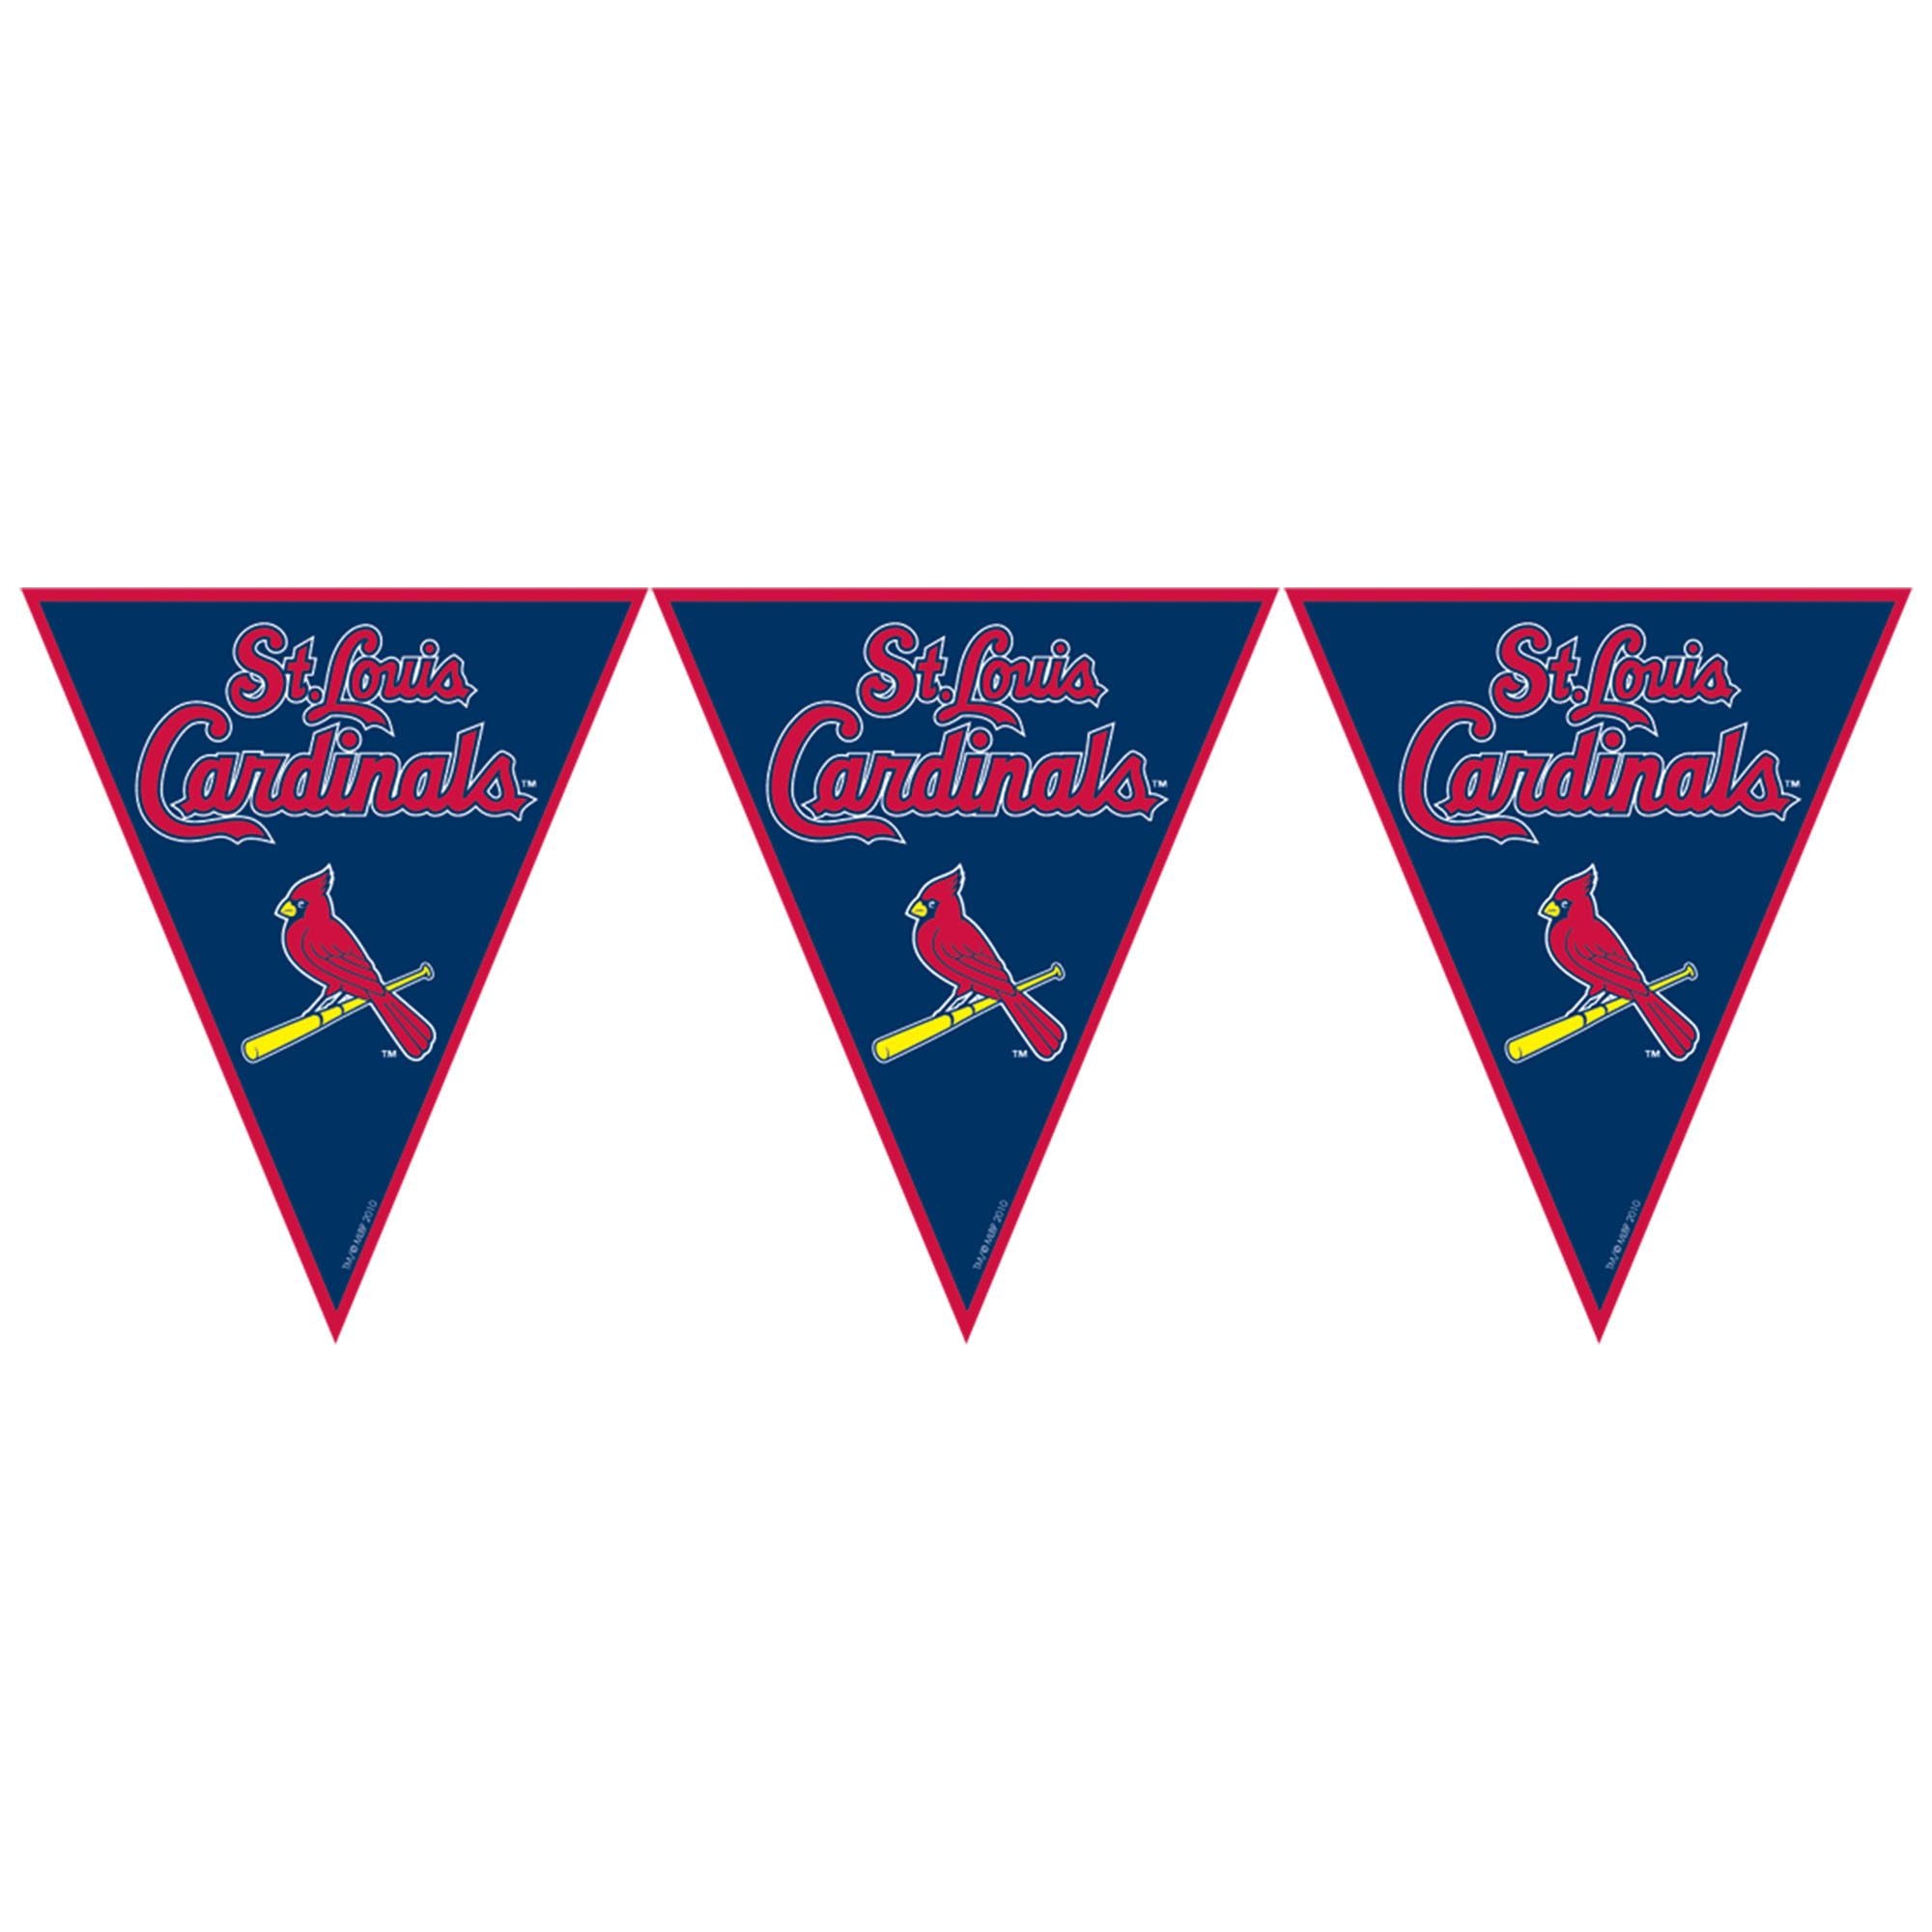 St. Louis Cardinals Major League Baseball Pennant Banner